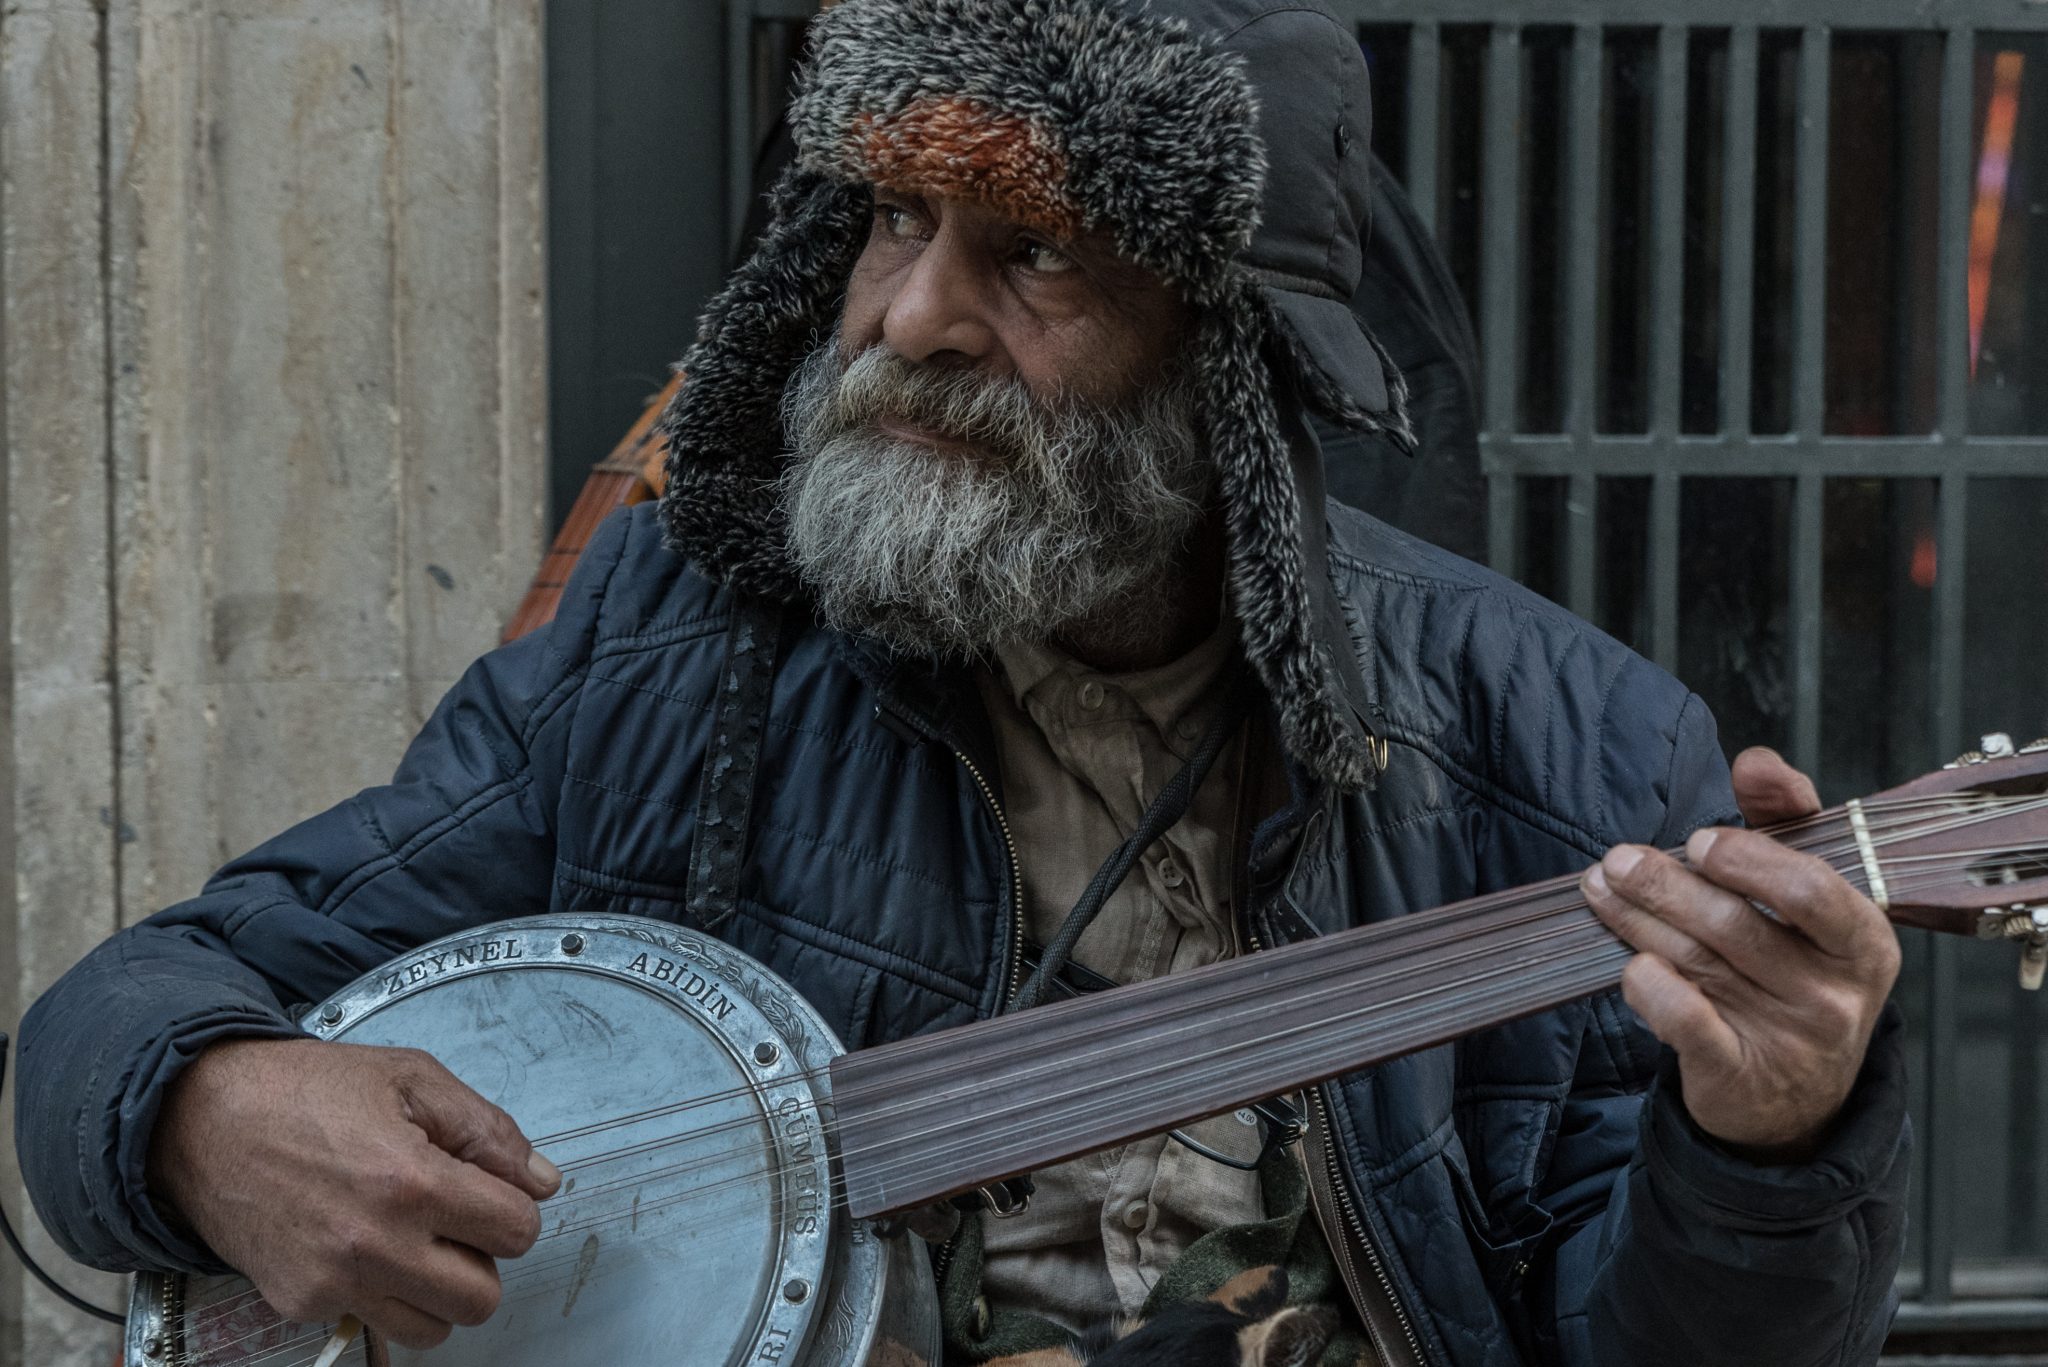 homeless, clochard, banjo, beard, portrait, traditional, culture, Istanbul, playing, music, street, photography, portrait, beard, hat